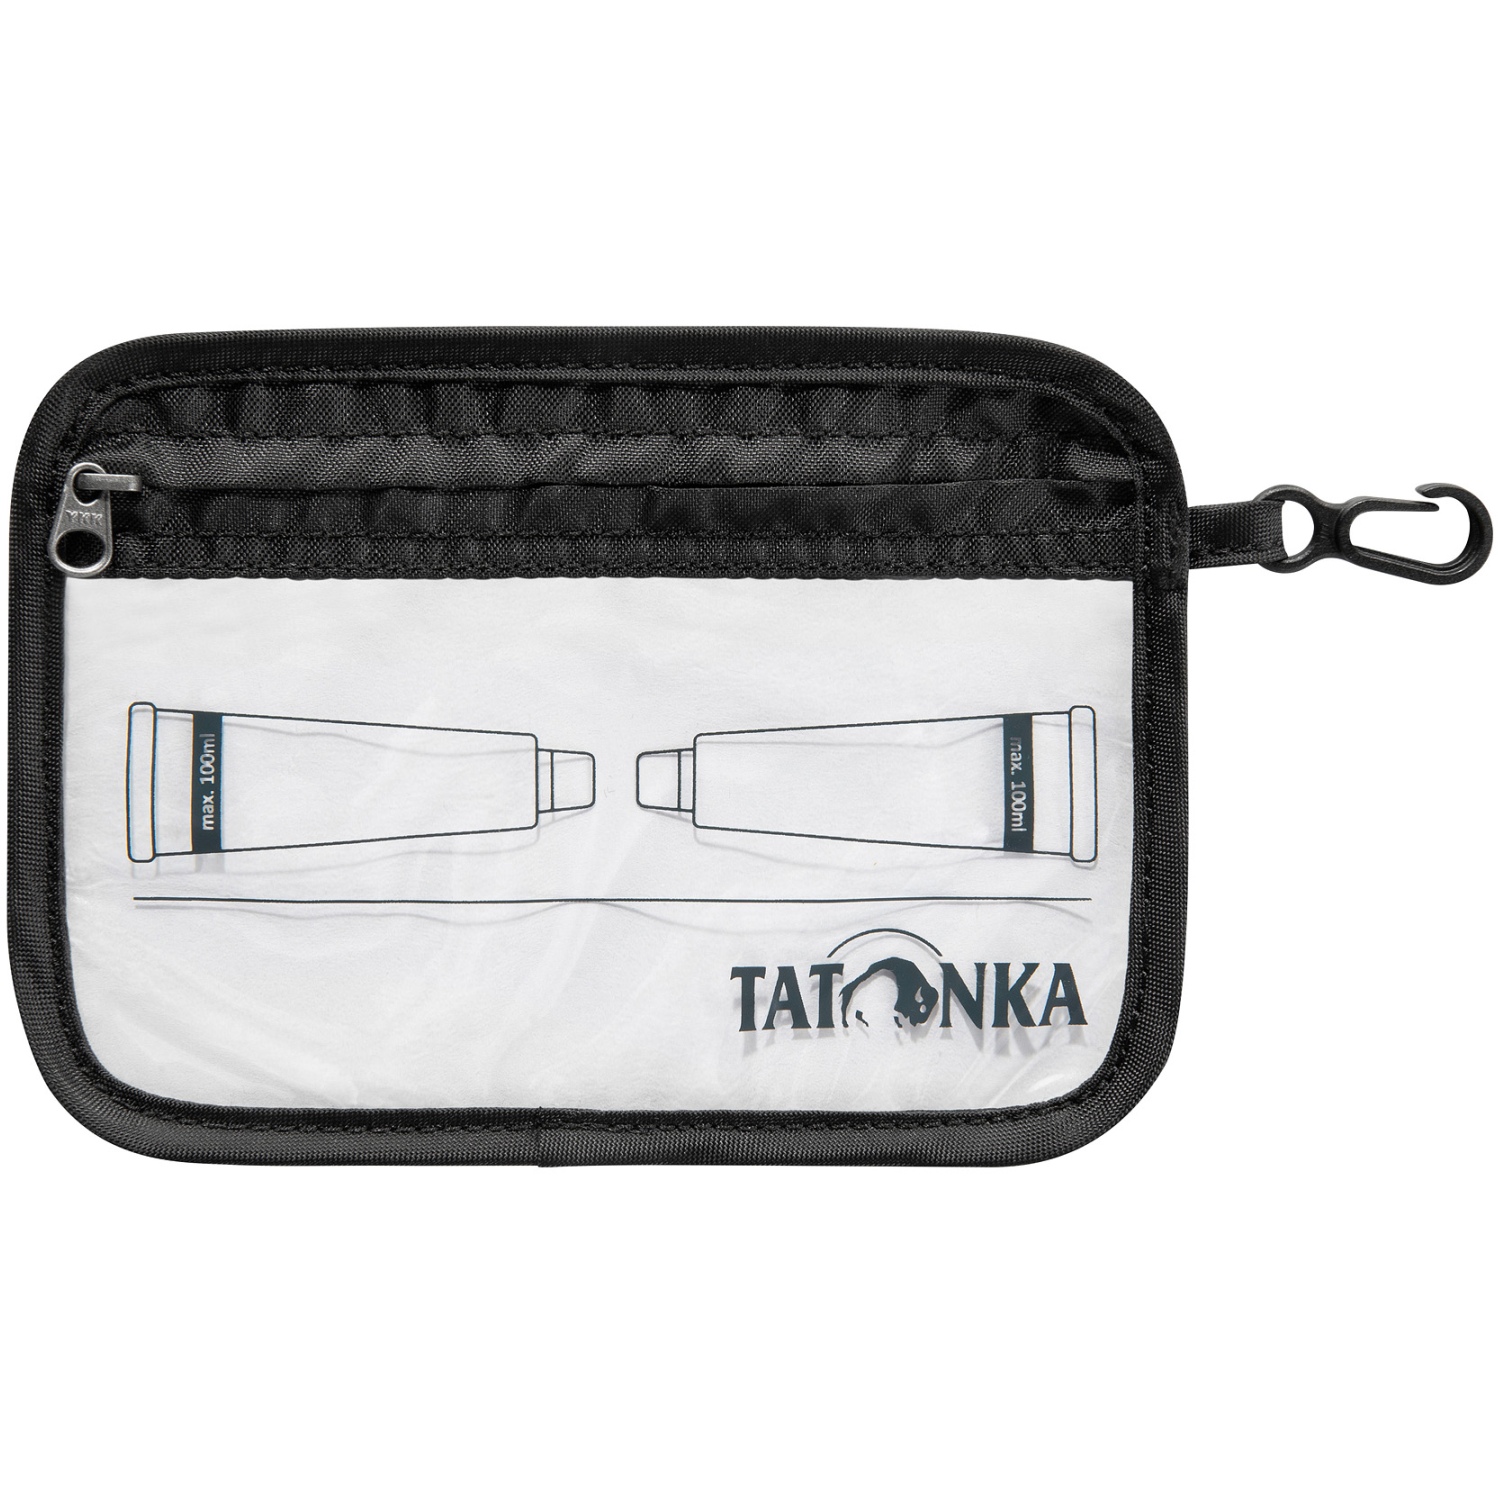 Productfoto van Tatonka Zip Flight Bag A6 - black